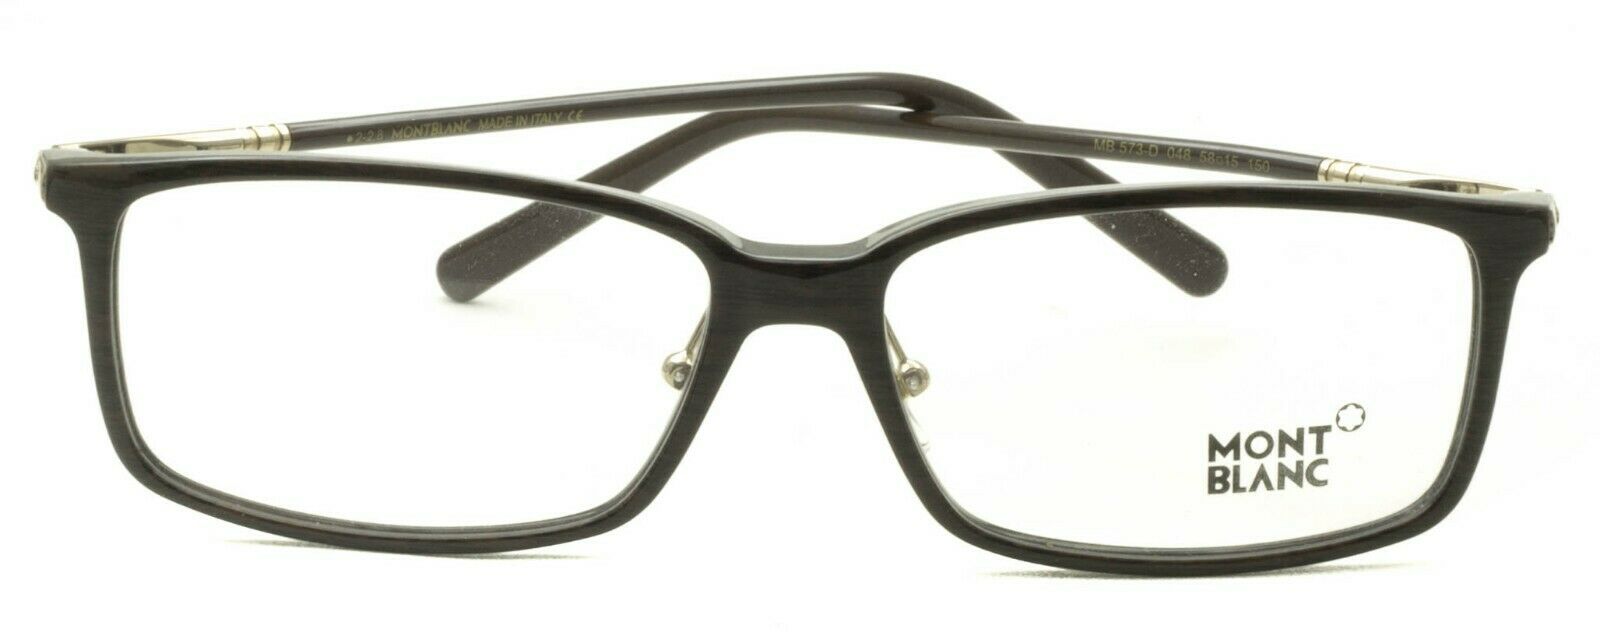 MONT BLANC MB 573-D 048 Eyewear FRAMES RX Optical Glasses Eyeglasses BNIB ITALY